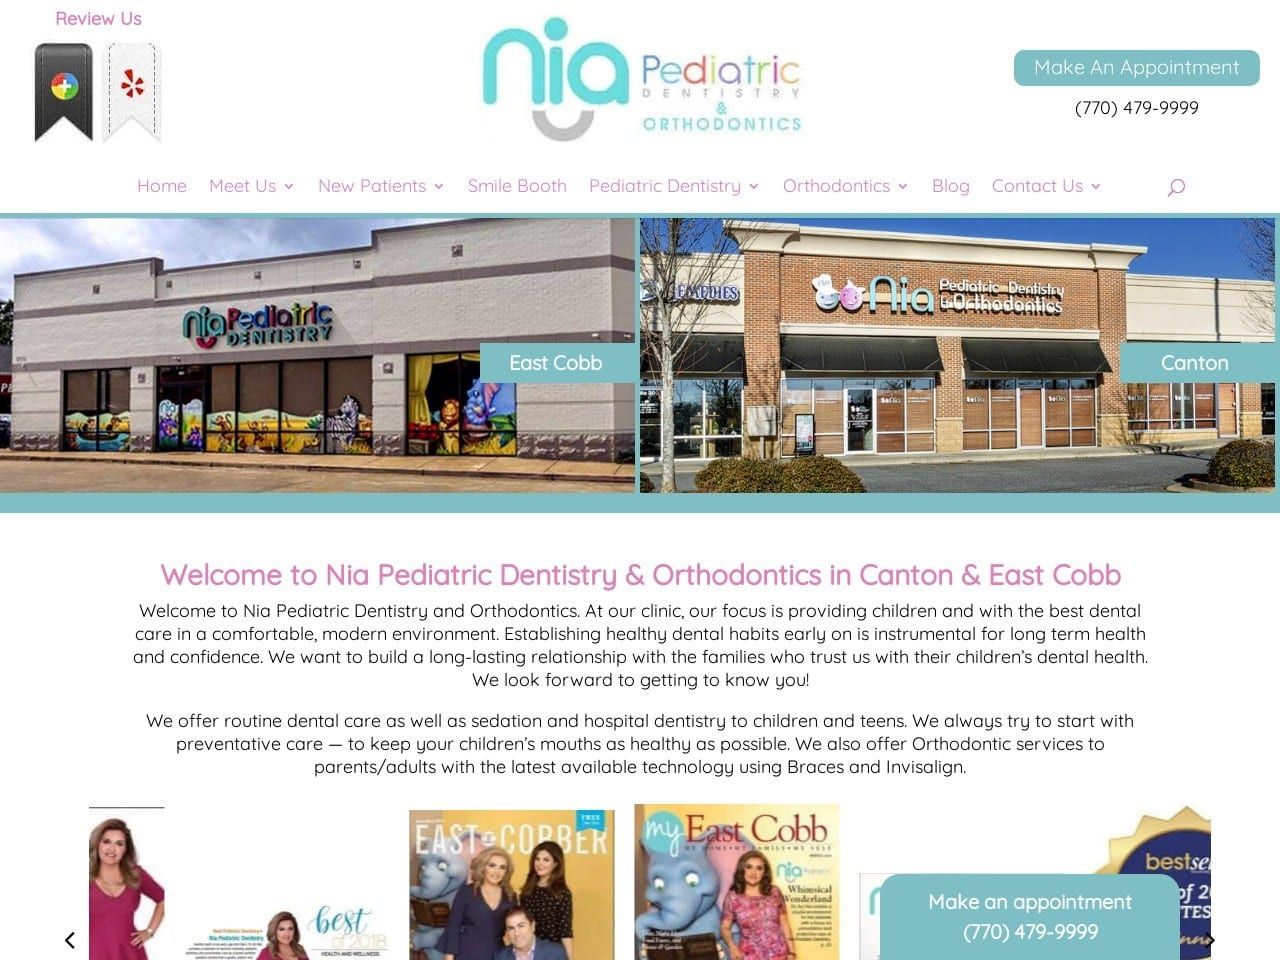 Nia Pediatric Dentist Website Screenshot from niadentistry.com